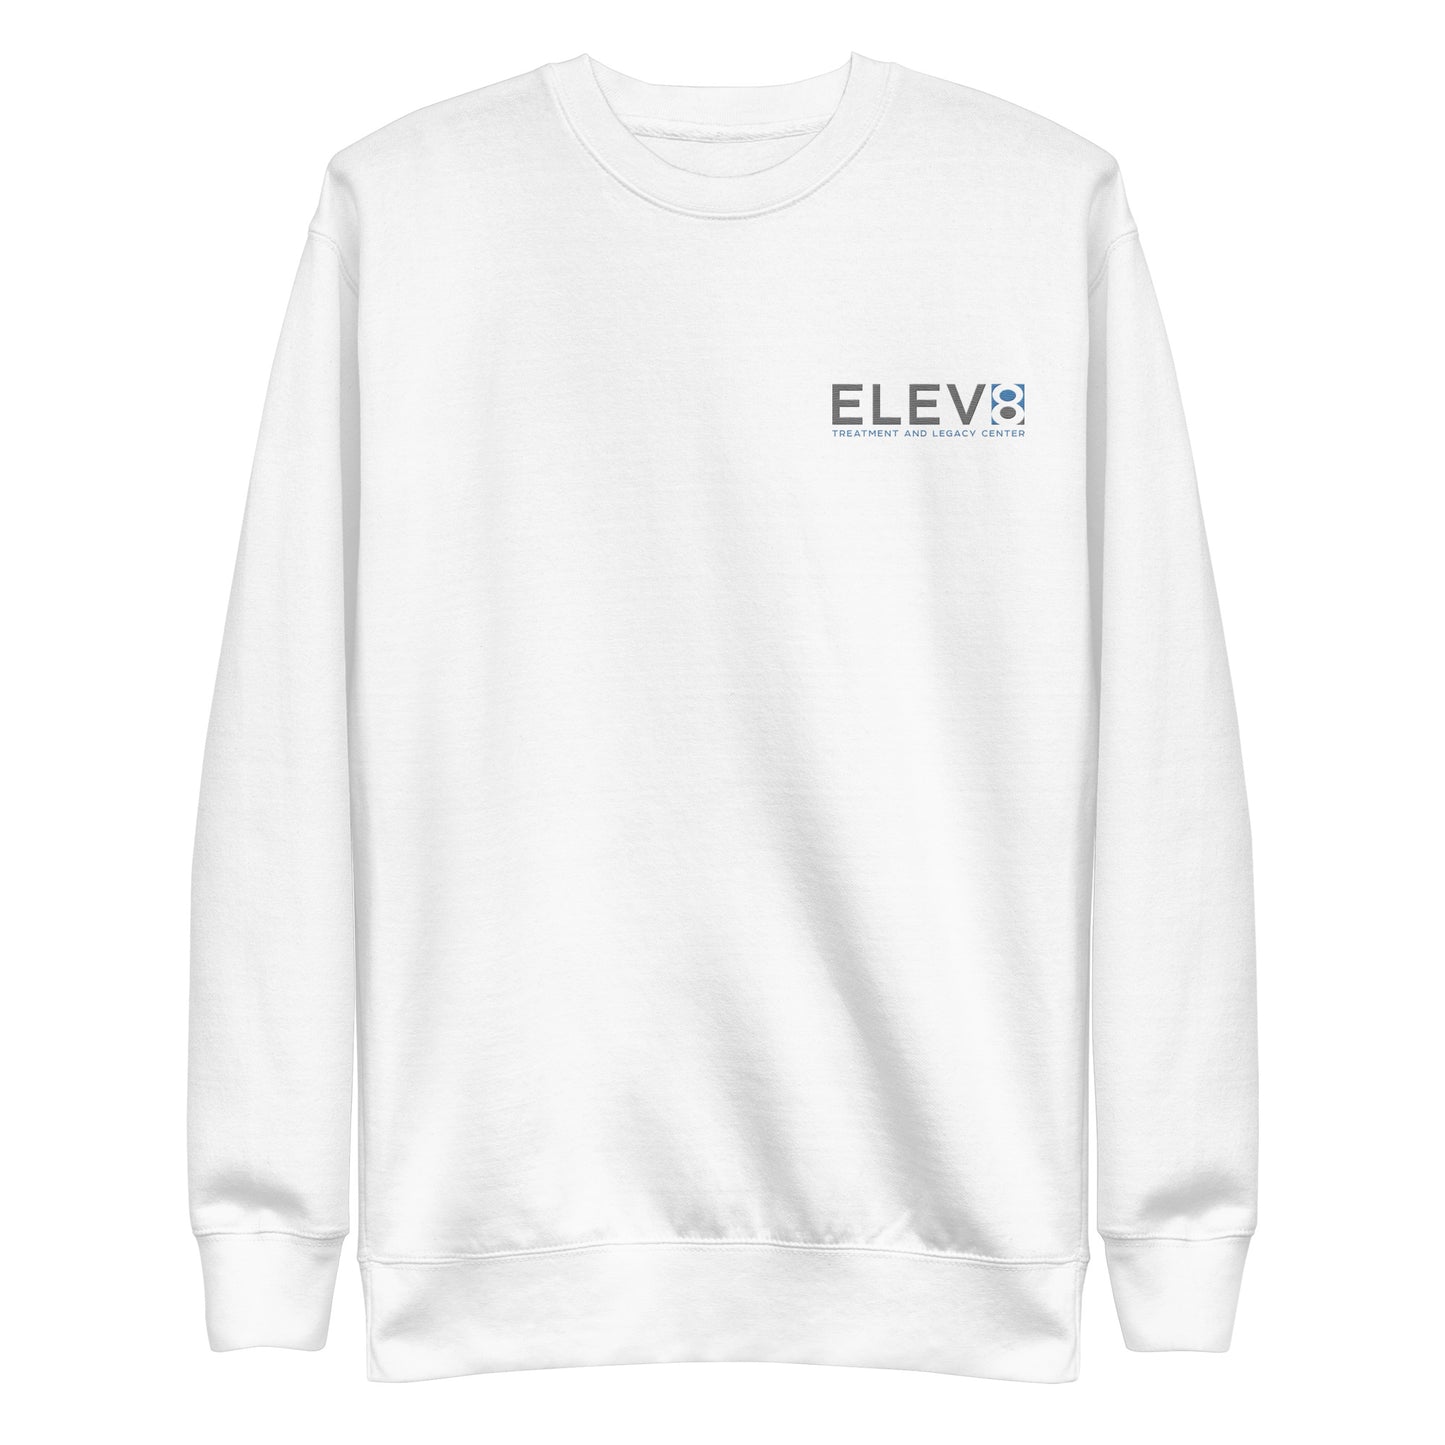 Elev8 Unisex Premium Sweatshirt